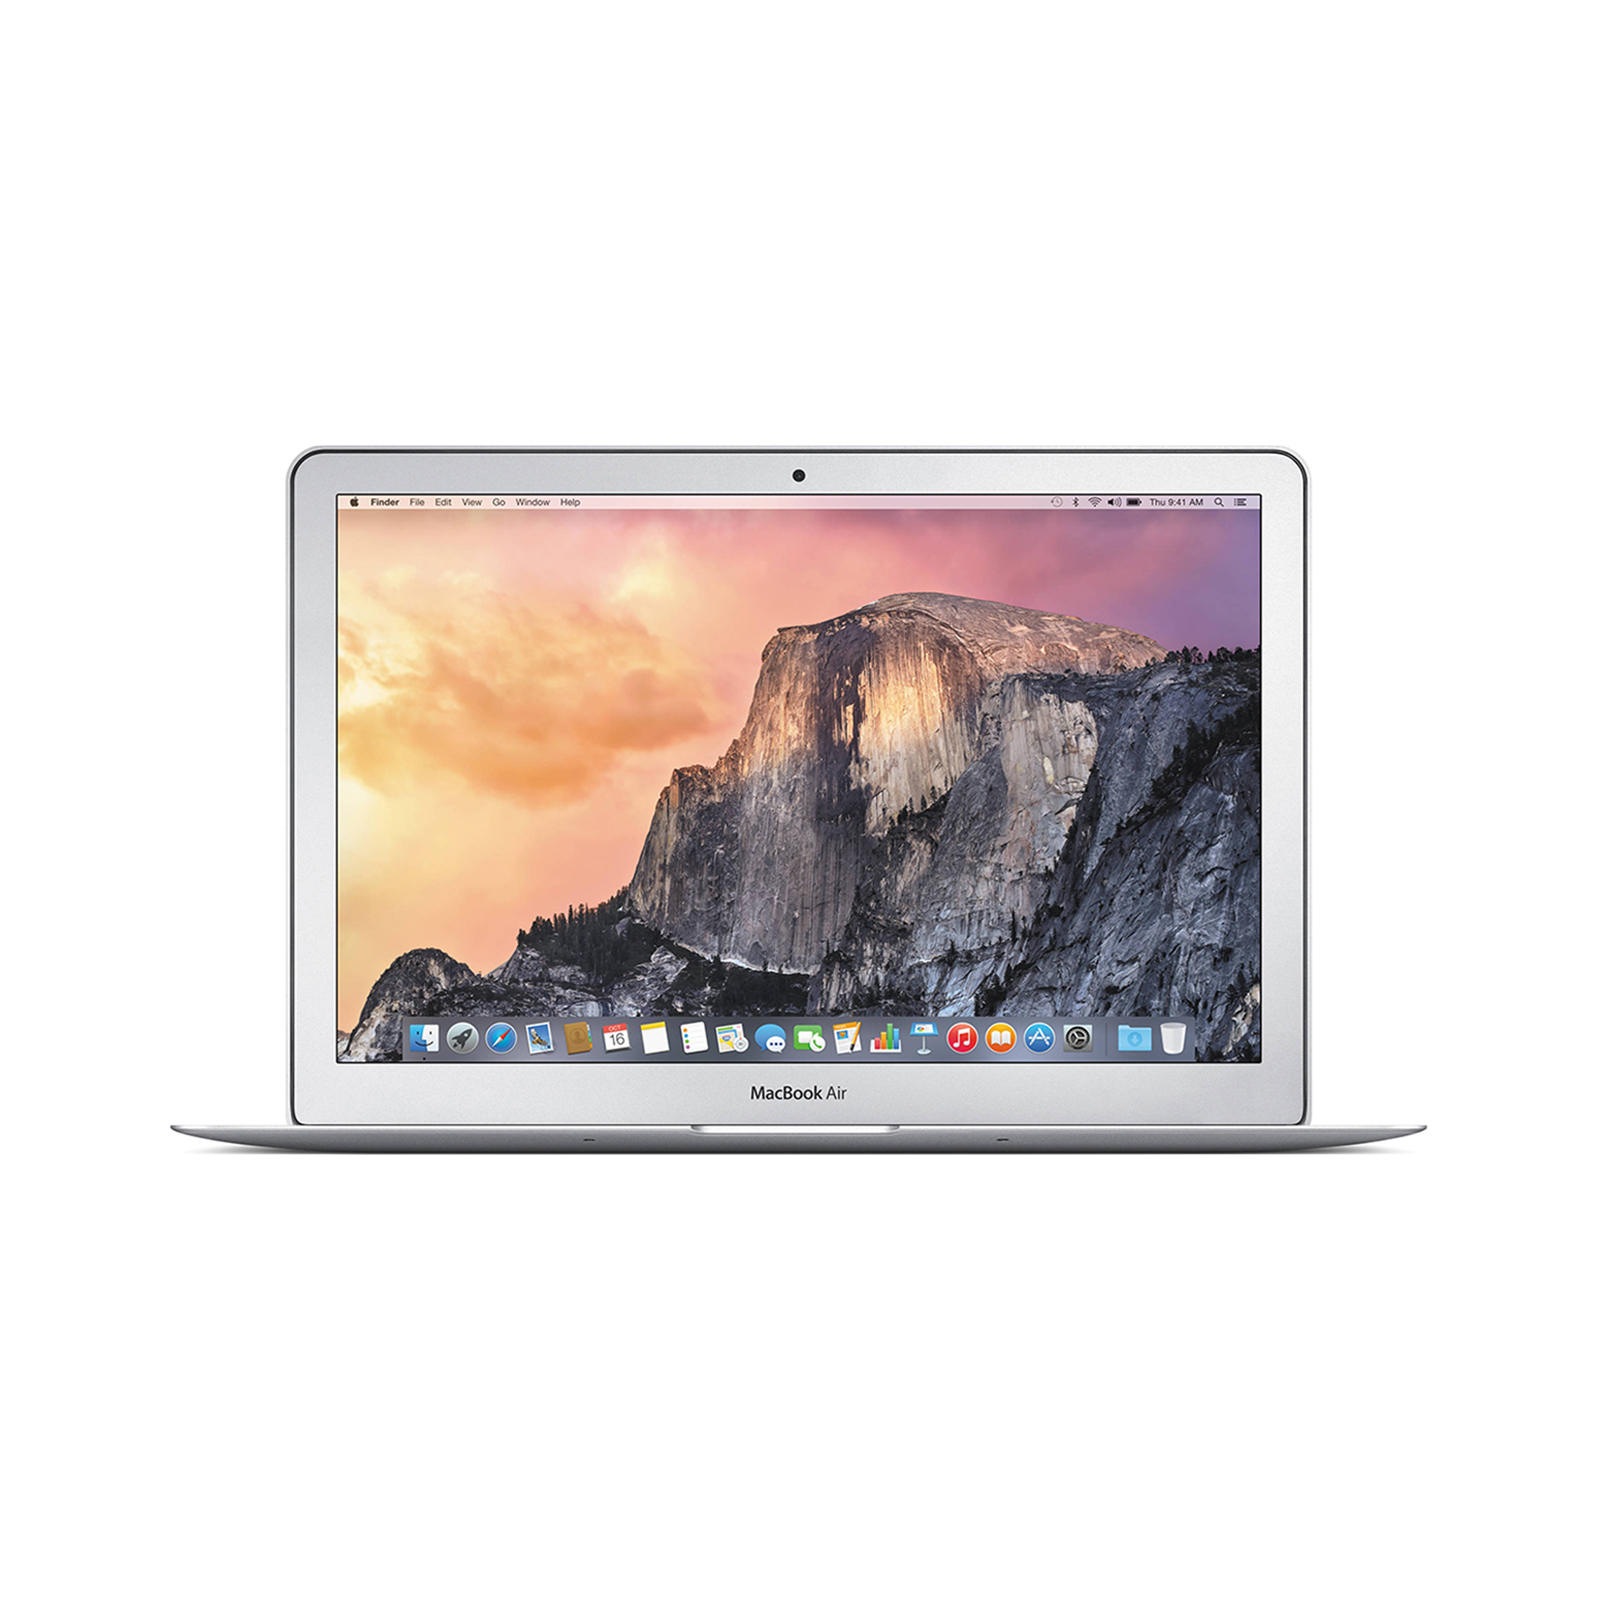 MacBook Air (13-inch, Early 2014) Intel Core i5 1.4 GHz 4GB 128GB